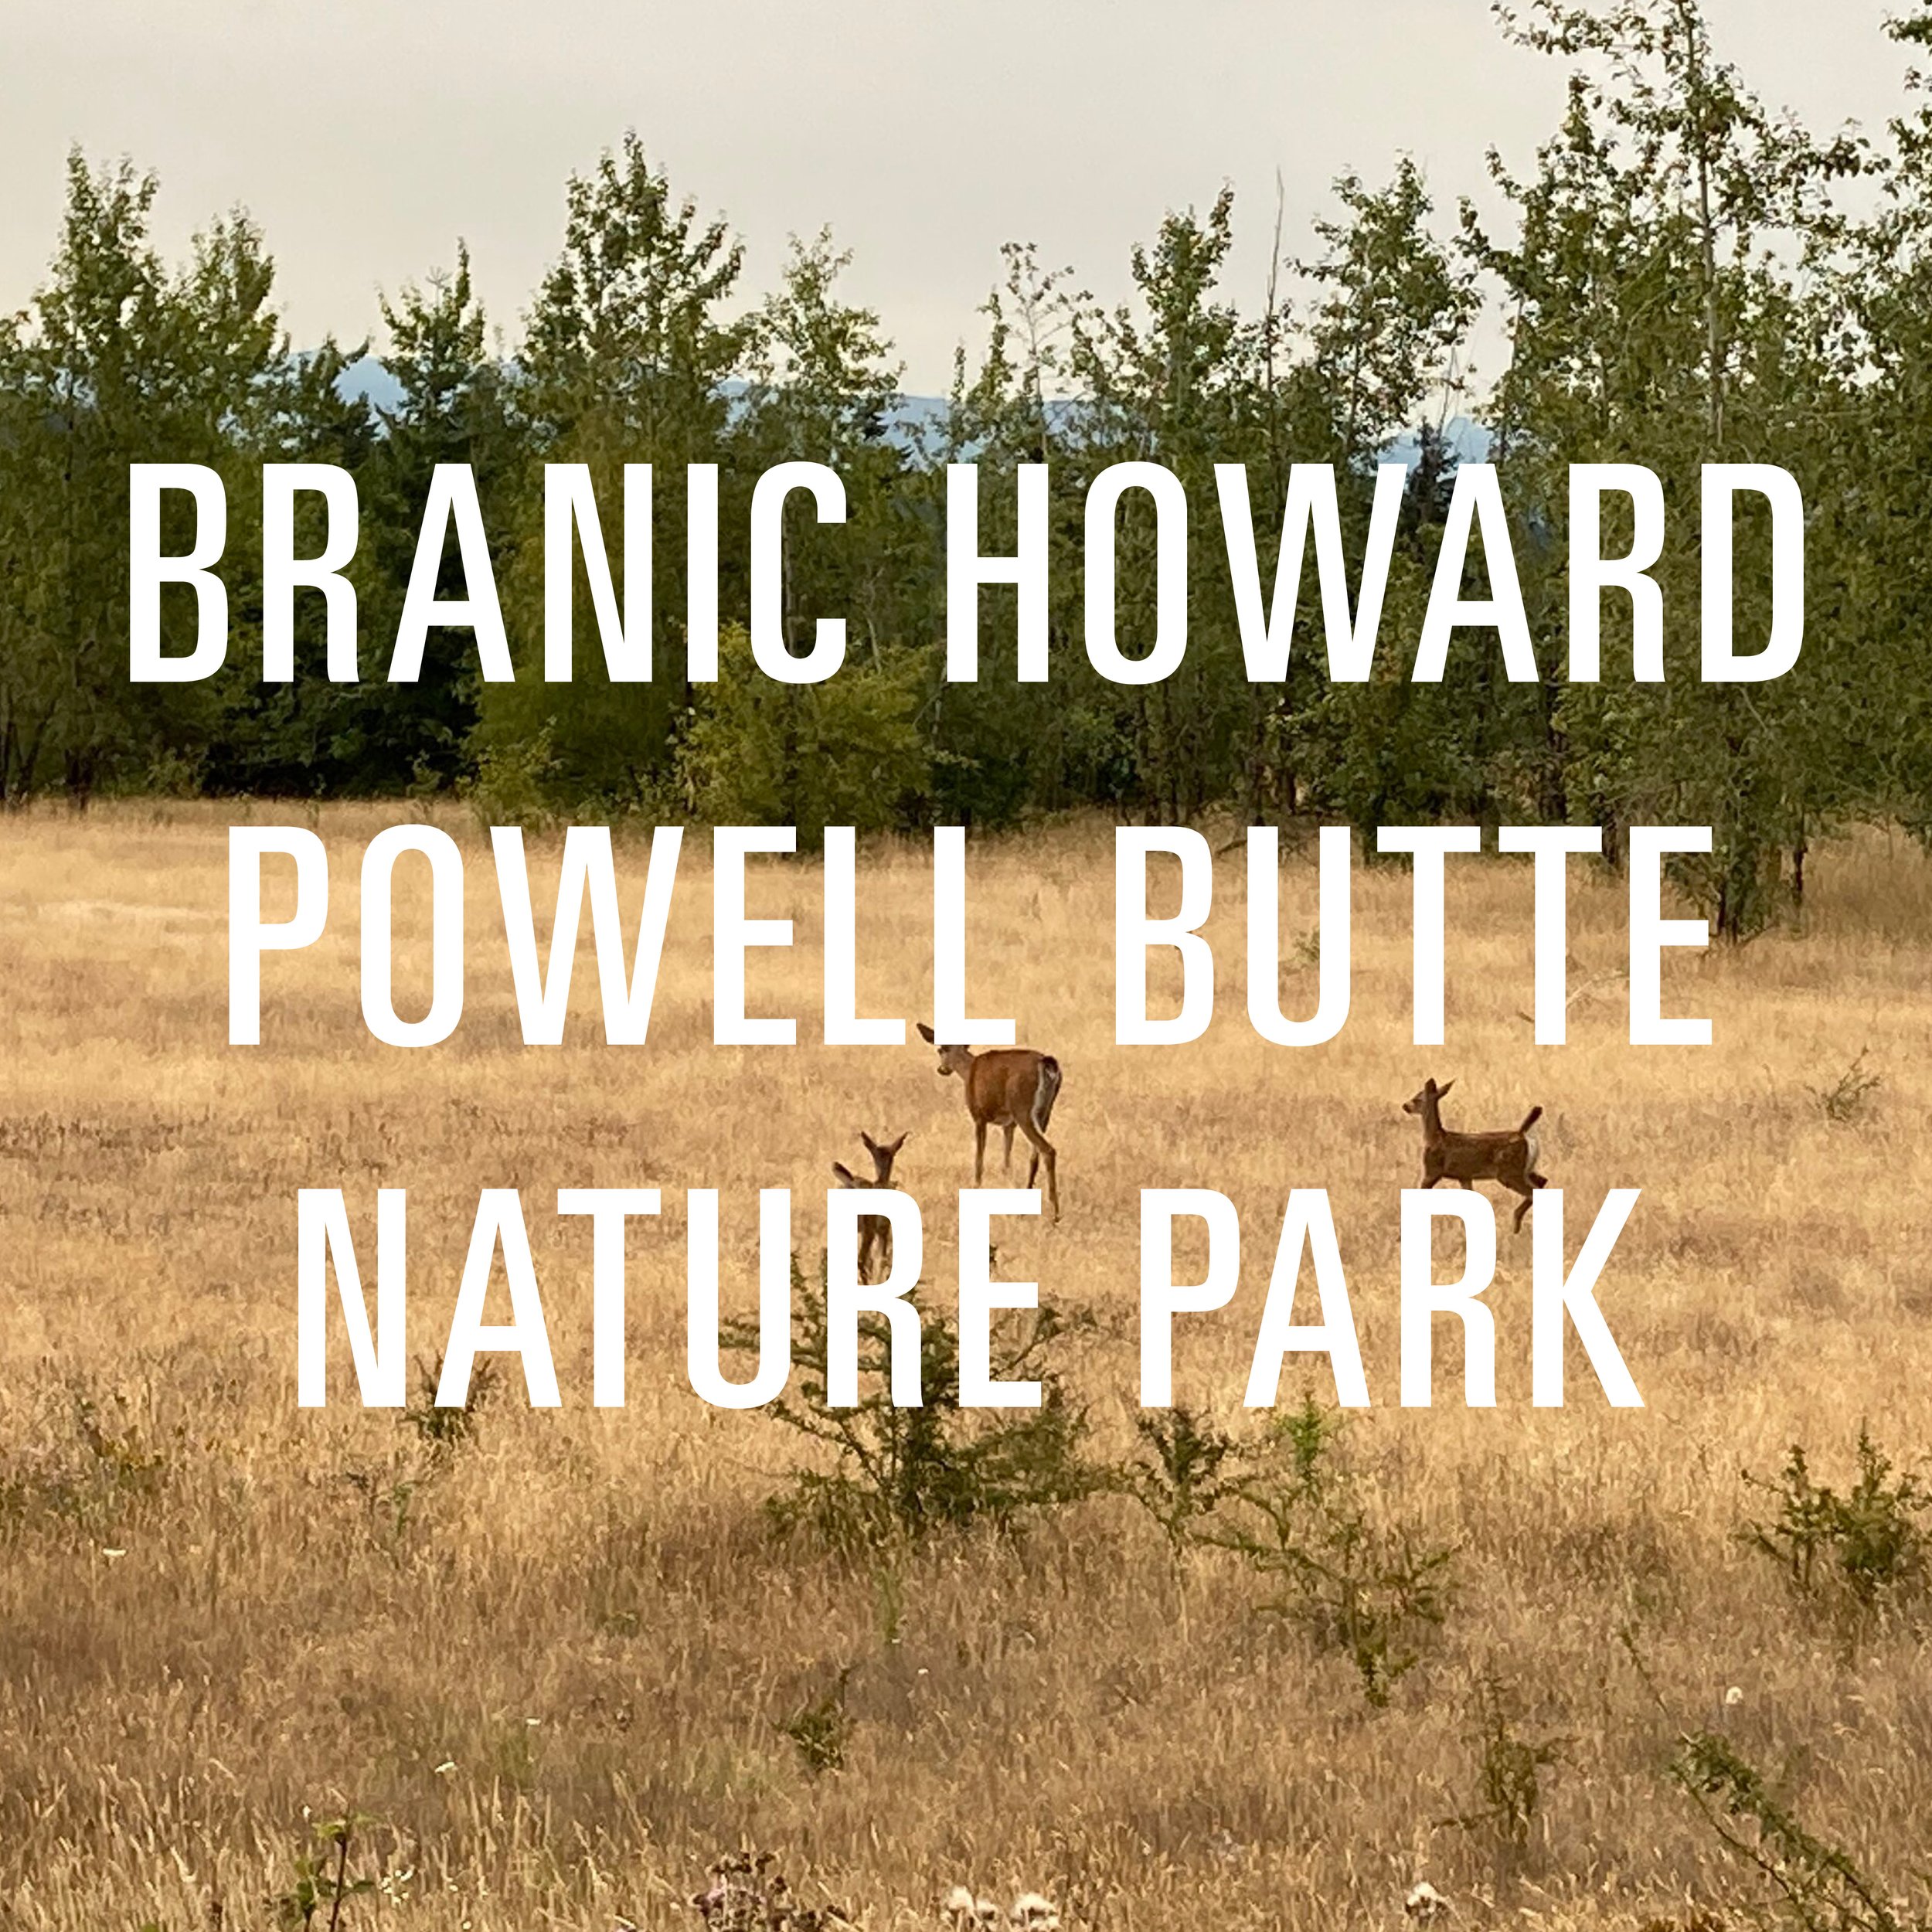 Branic Howard Powell Butte Nature Park